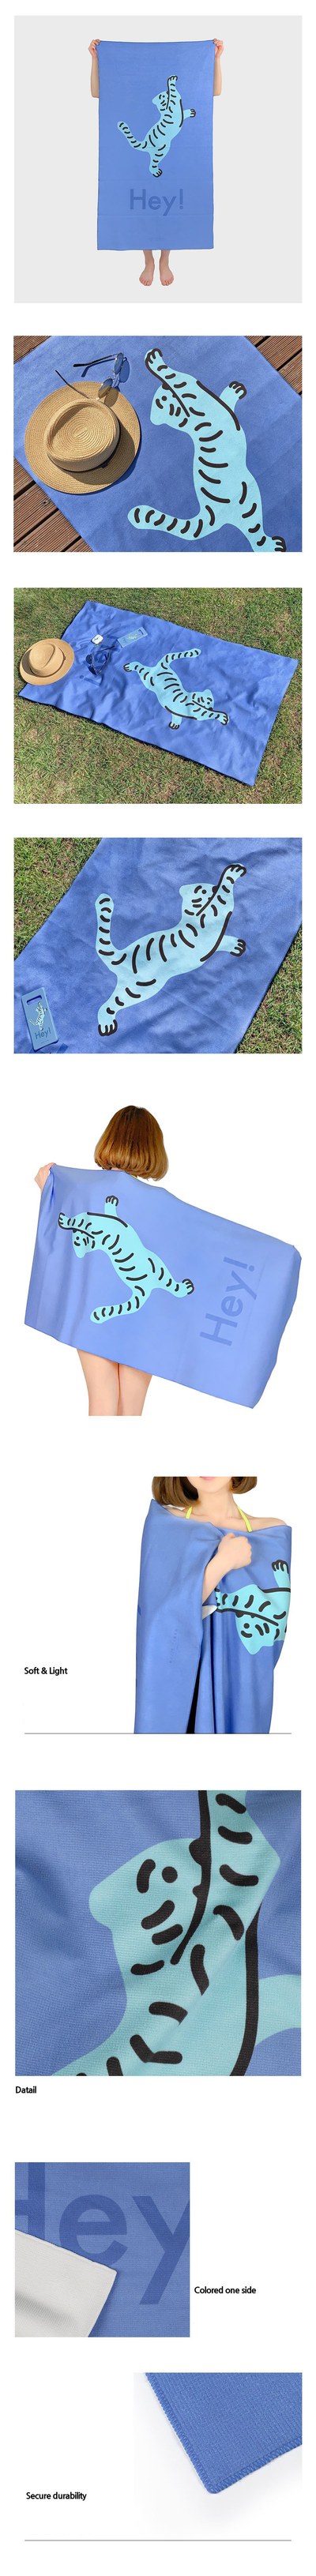 Hey Tiger beach towel